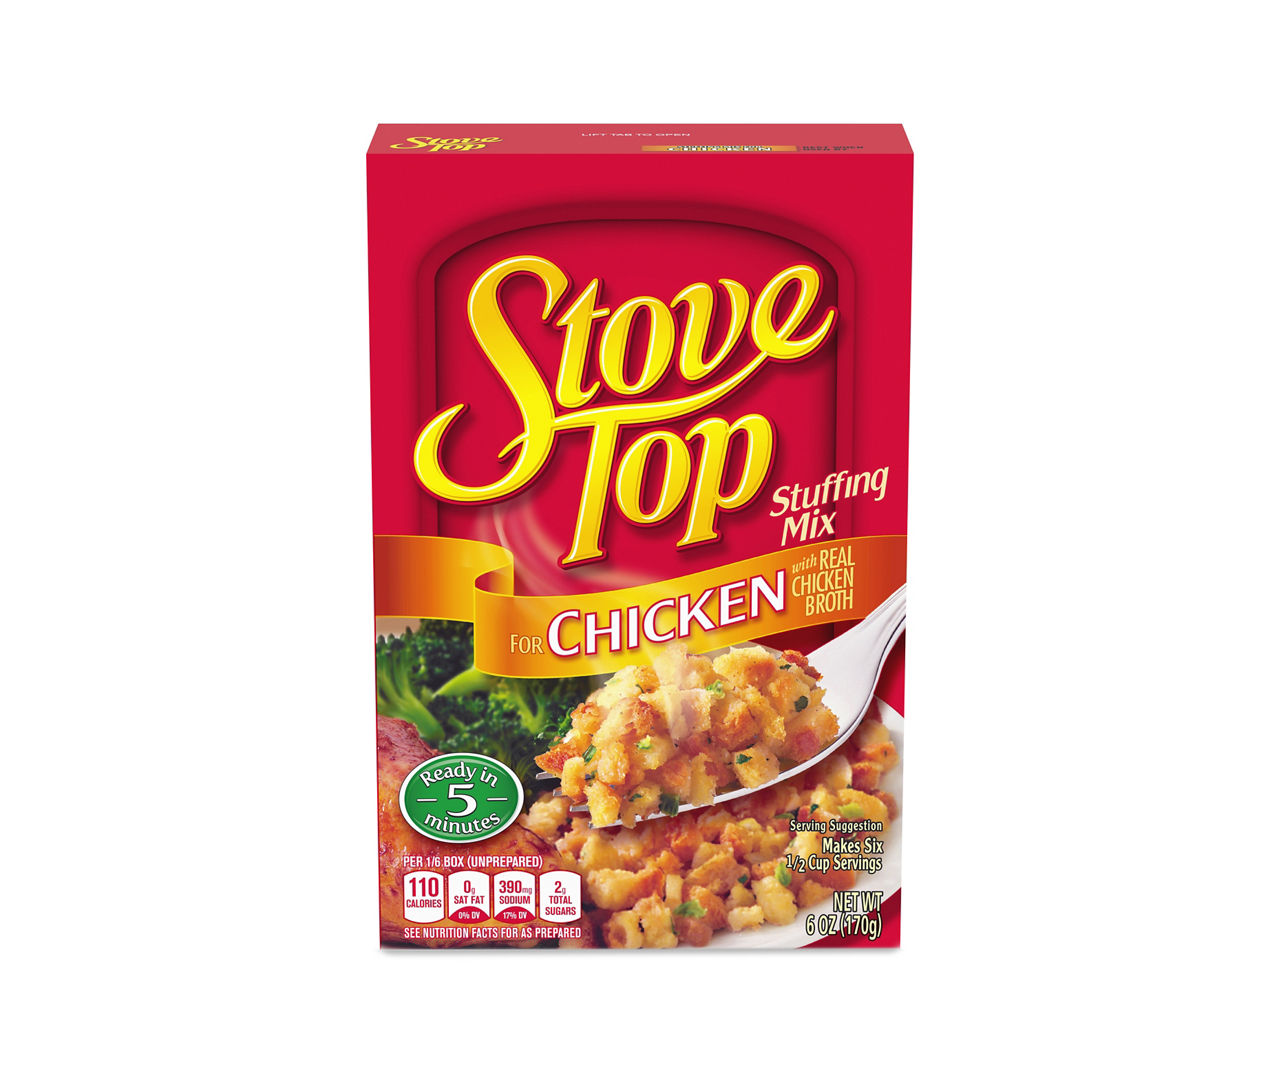 Stove Top Turkey Stuffing Mix Side Dish, 6 oz Box